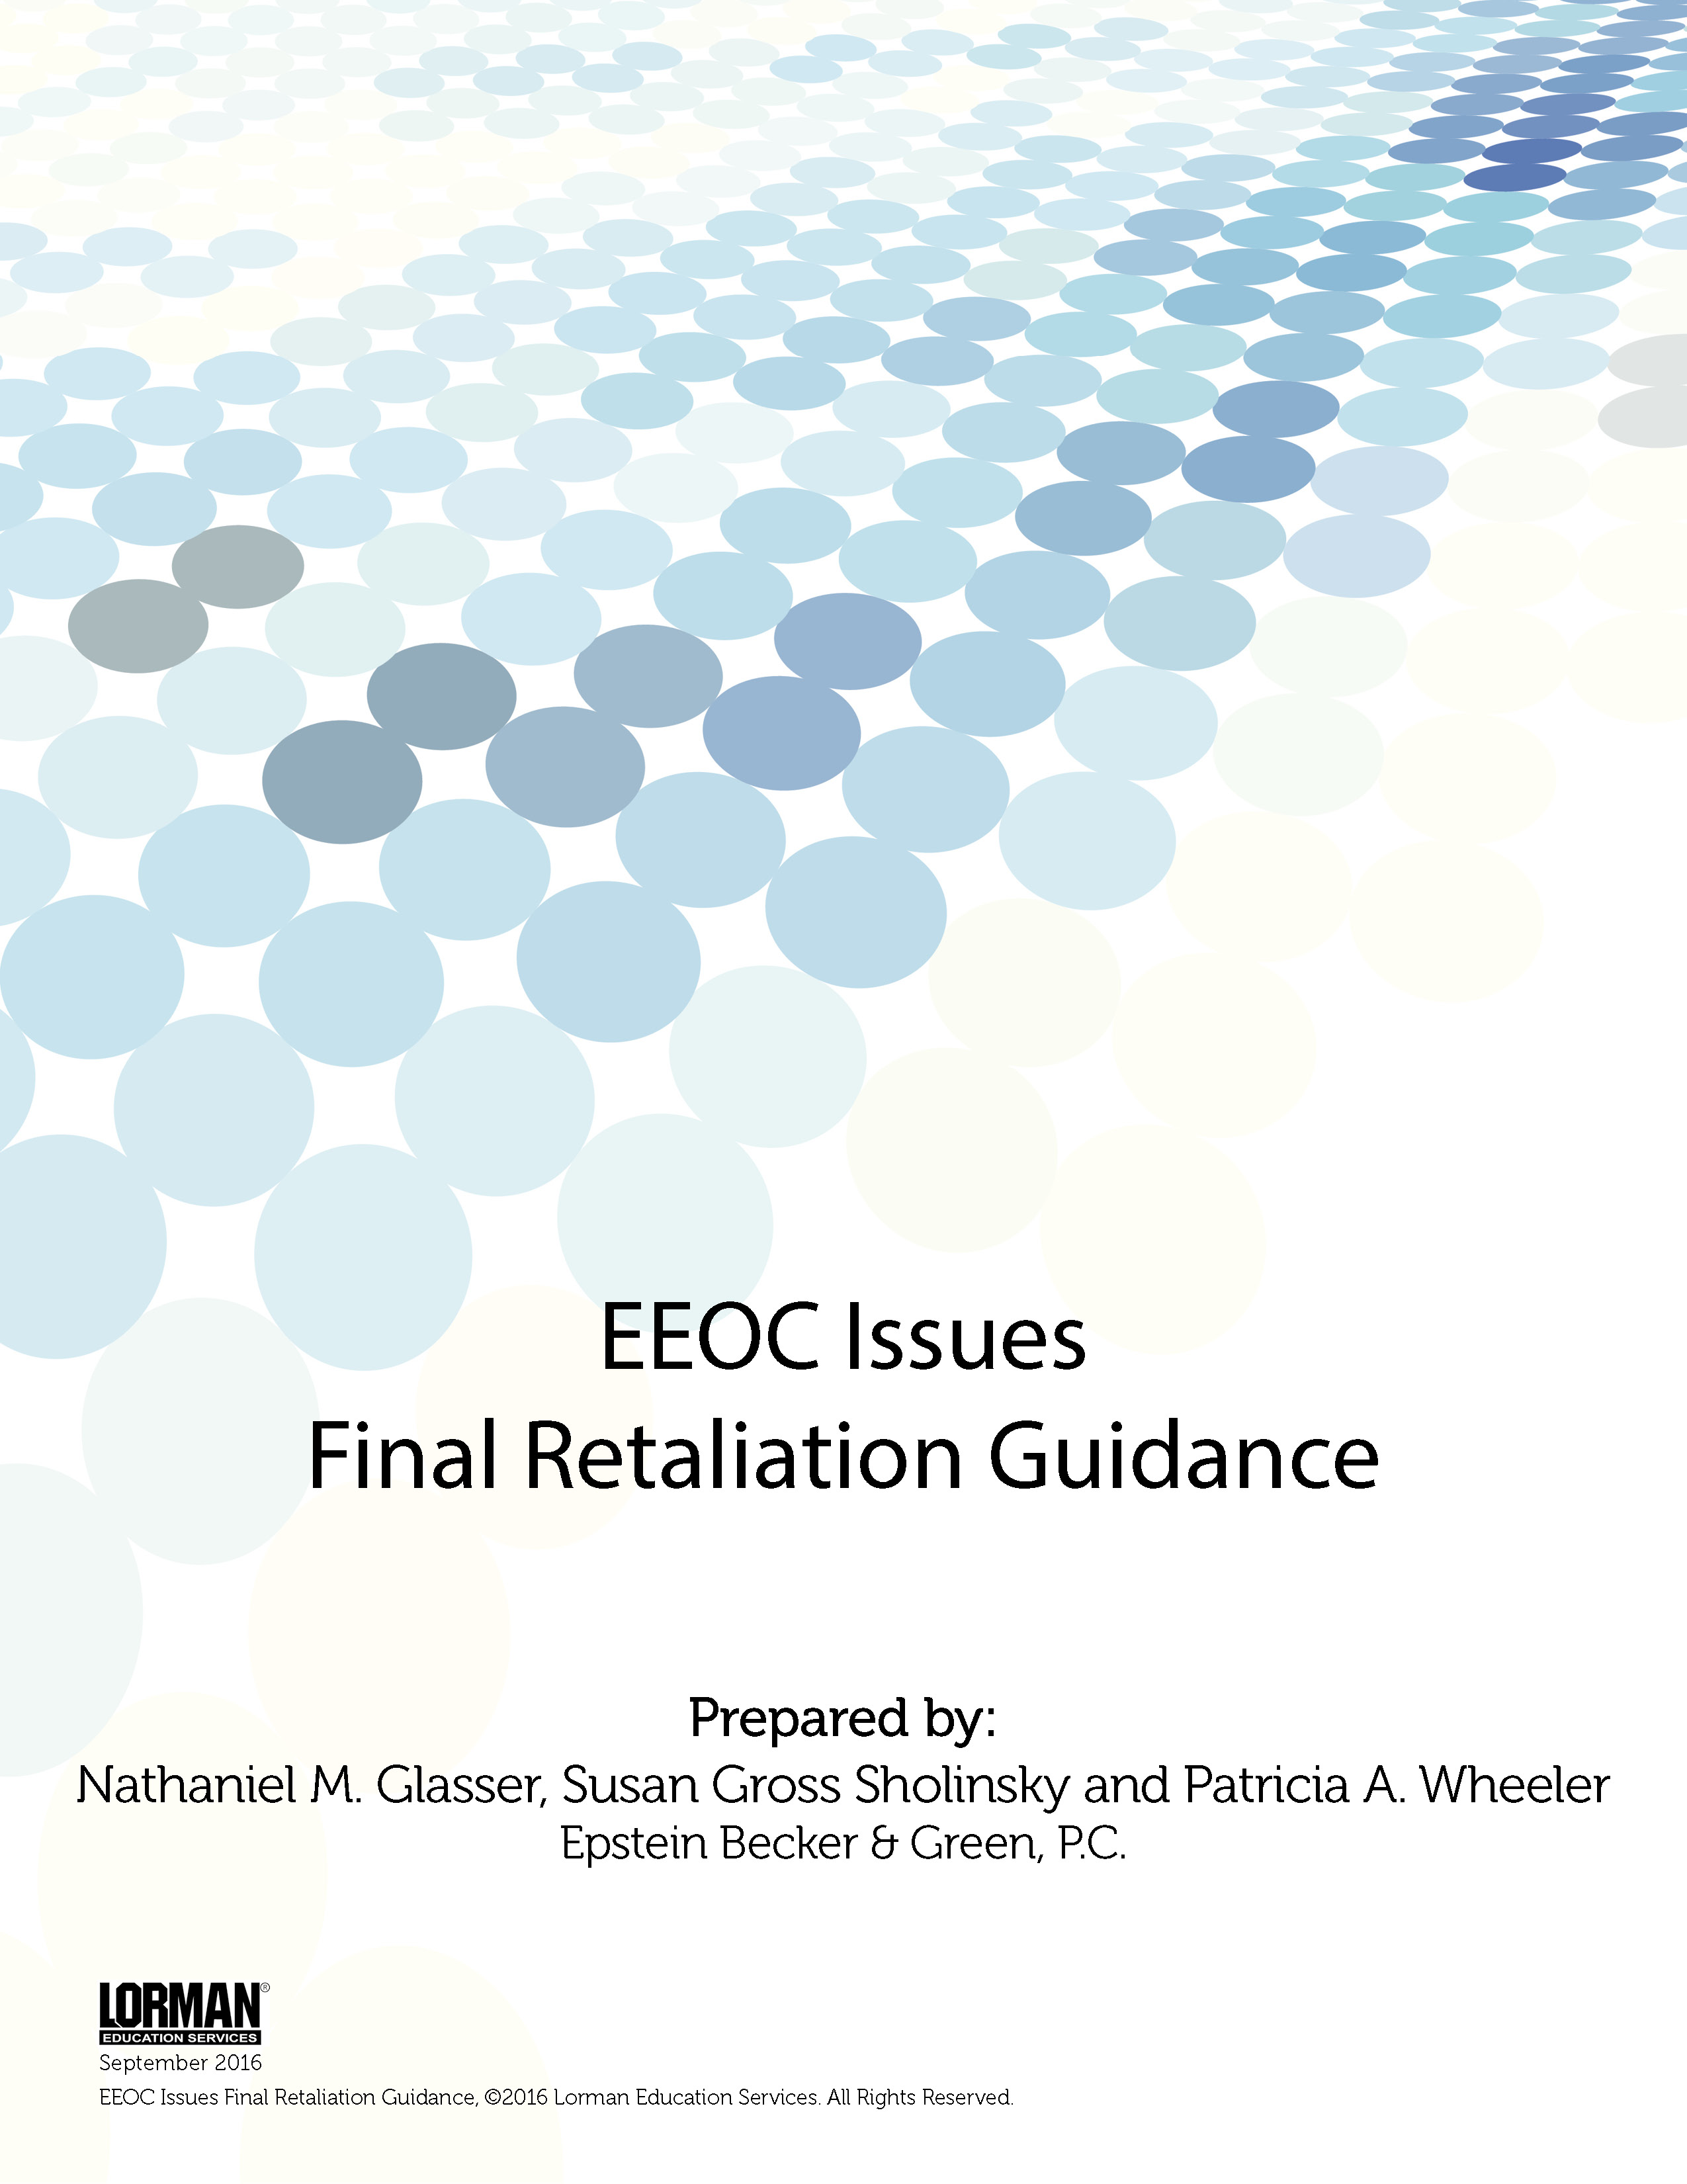 EEOC Issues Final Retaliation Guidance